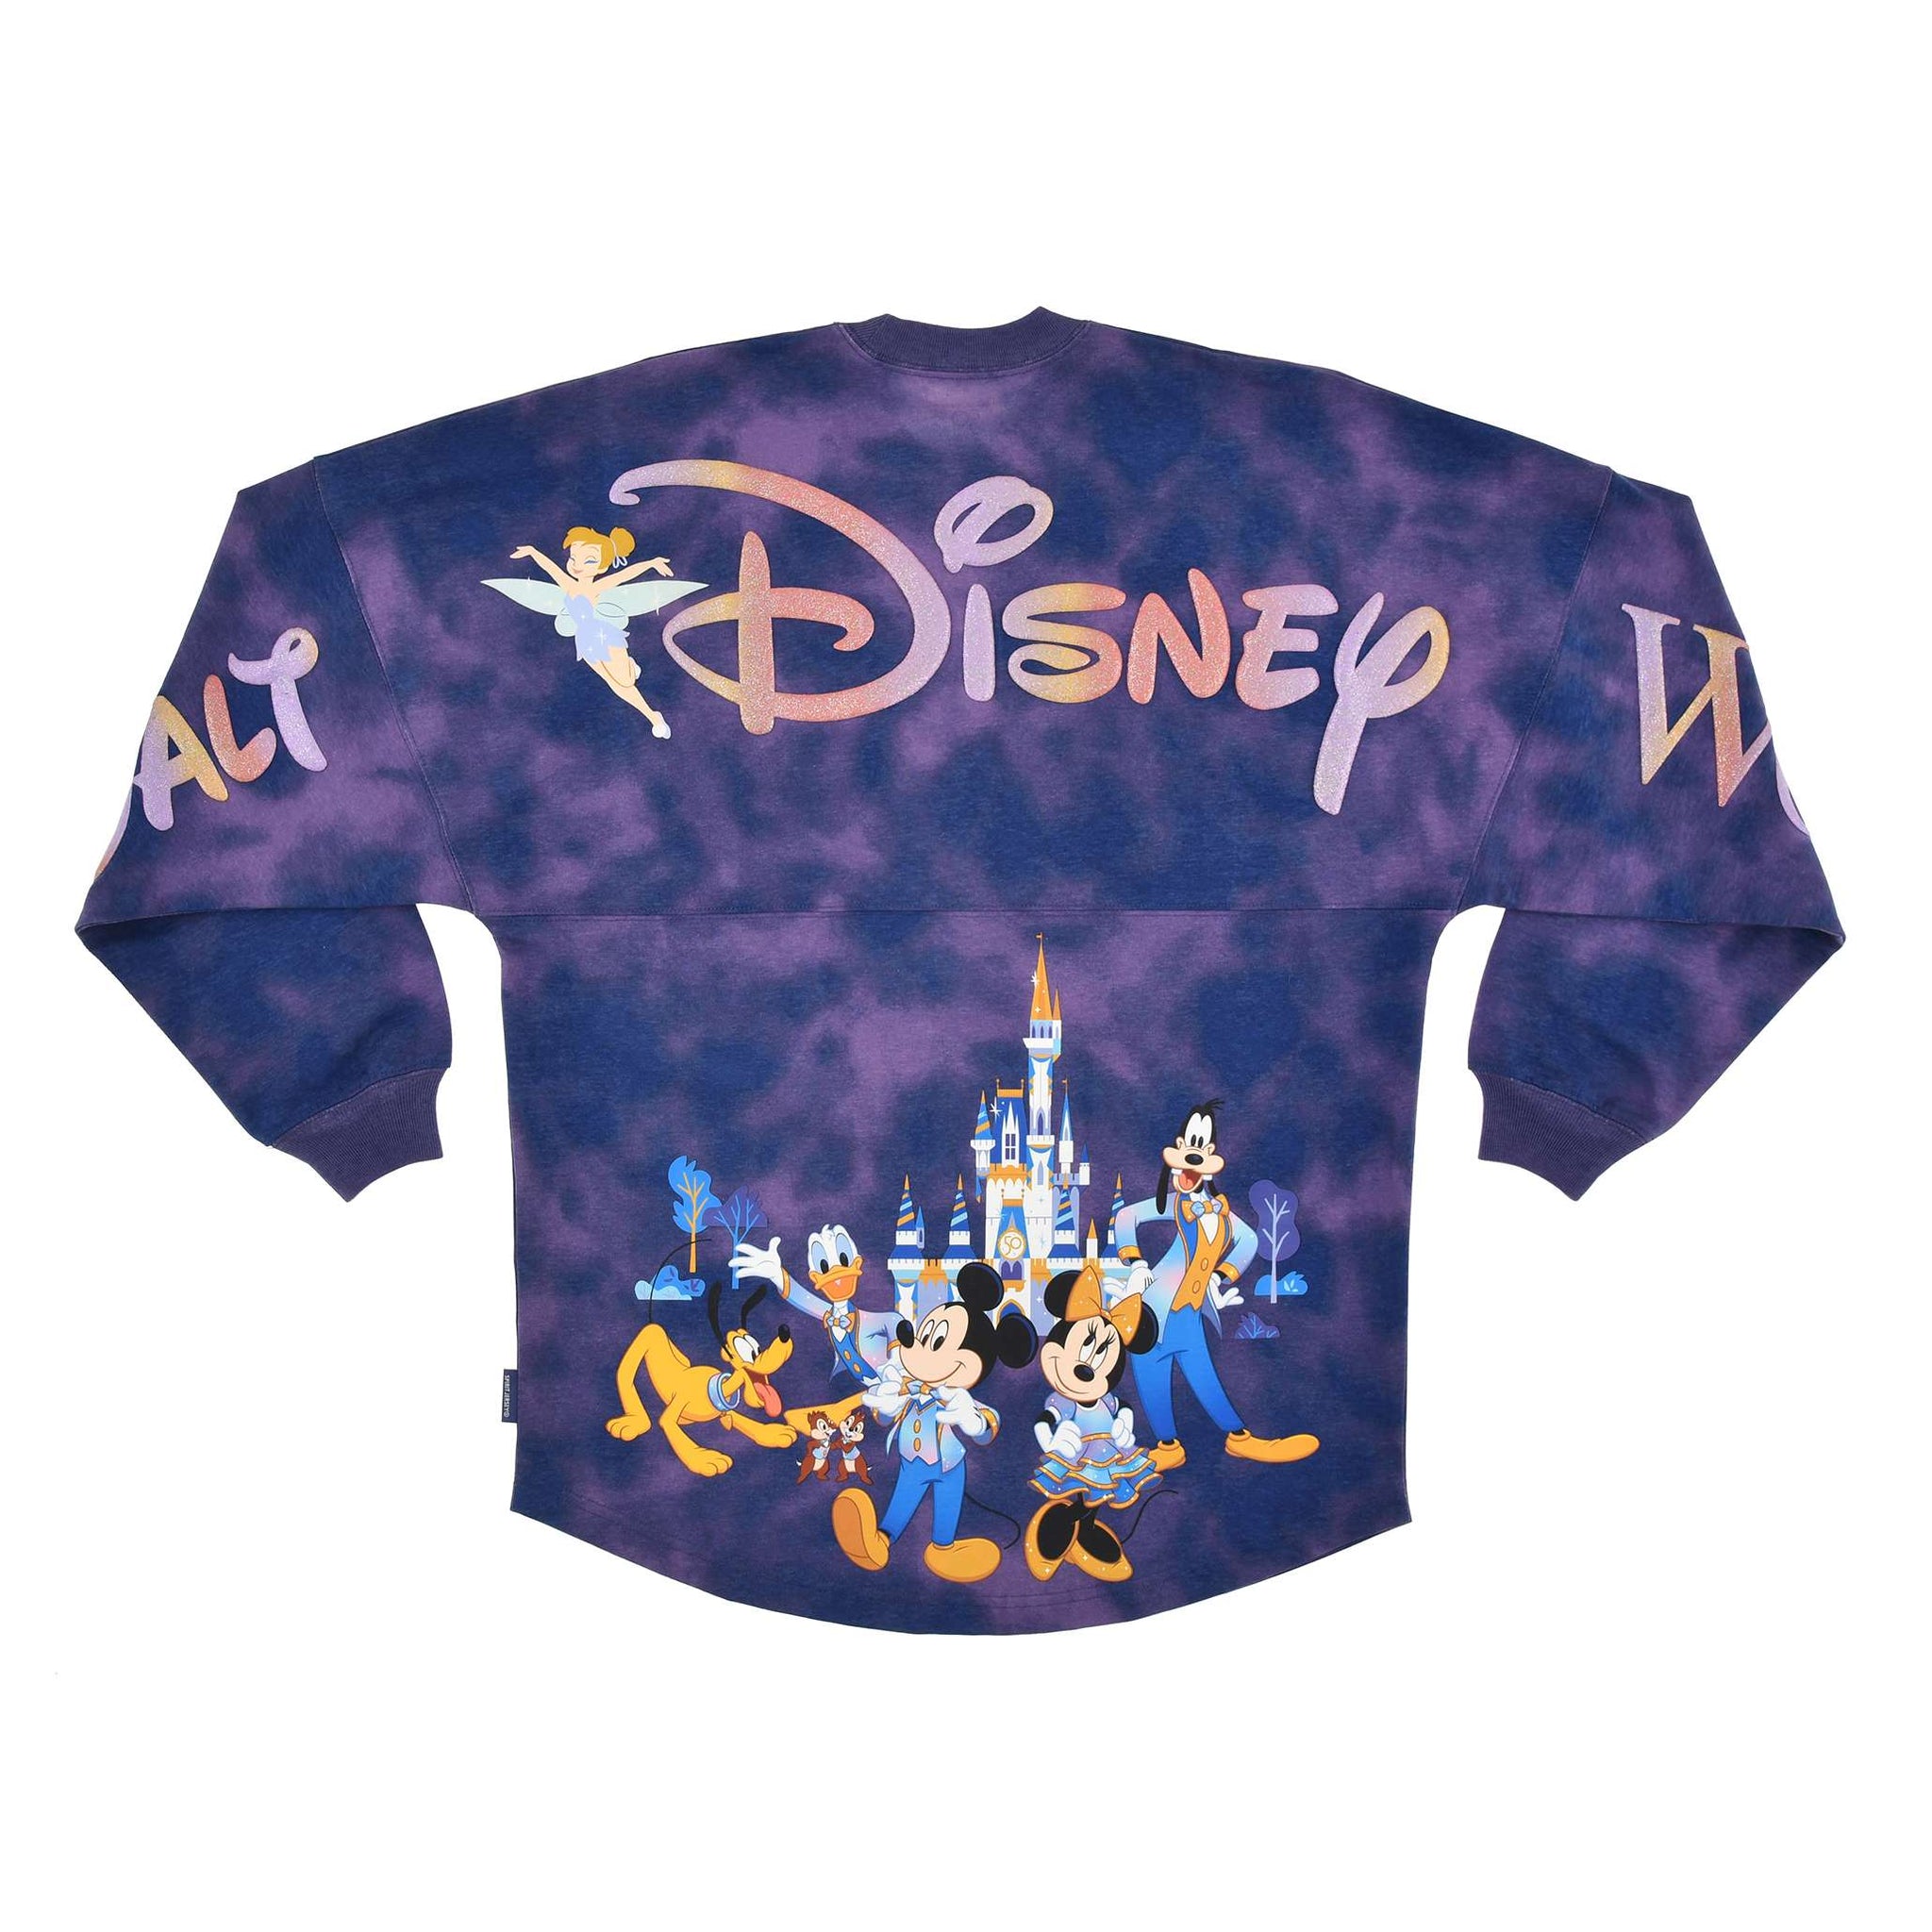 Disney Store - Spirit Jersey with Disney Character Walt Disney World 50th - Long Sleeve T-Shirt